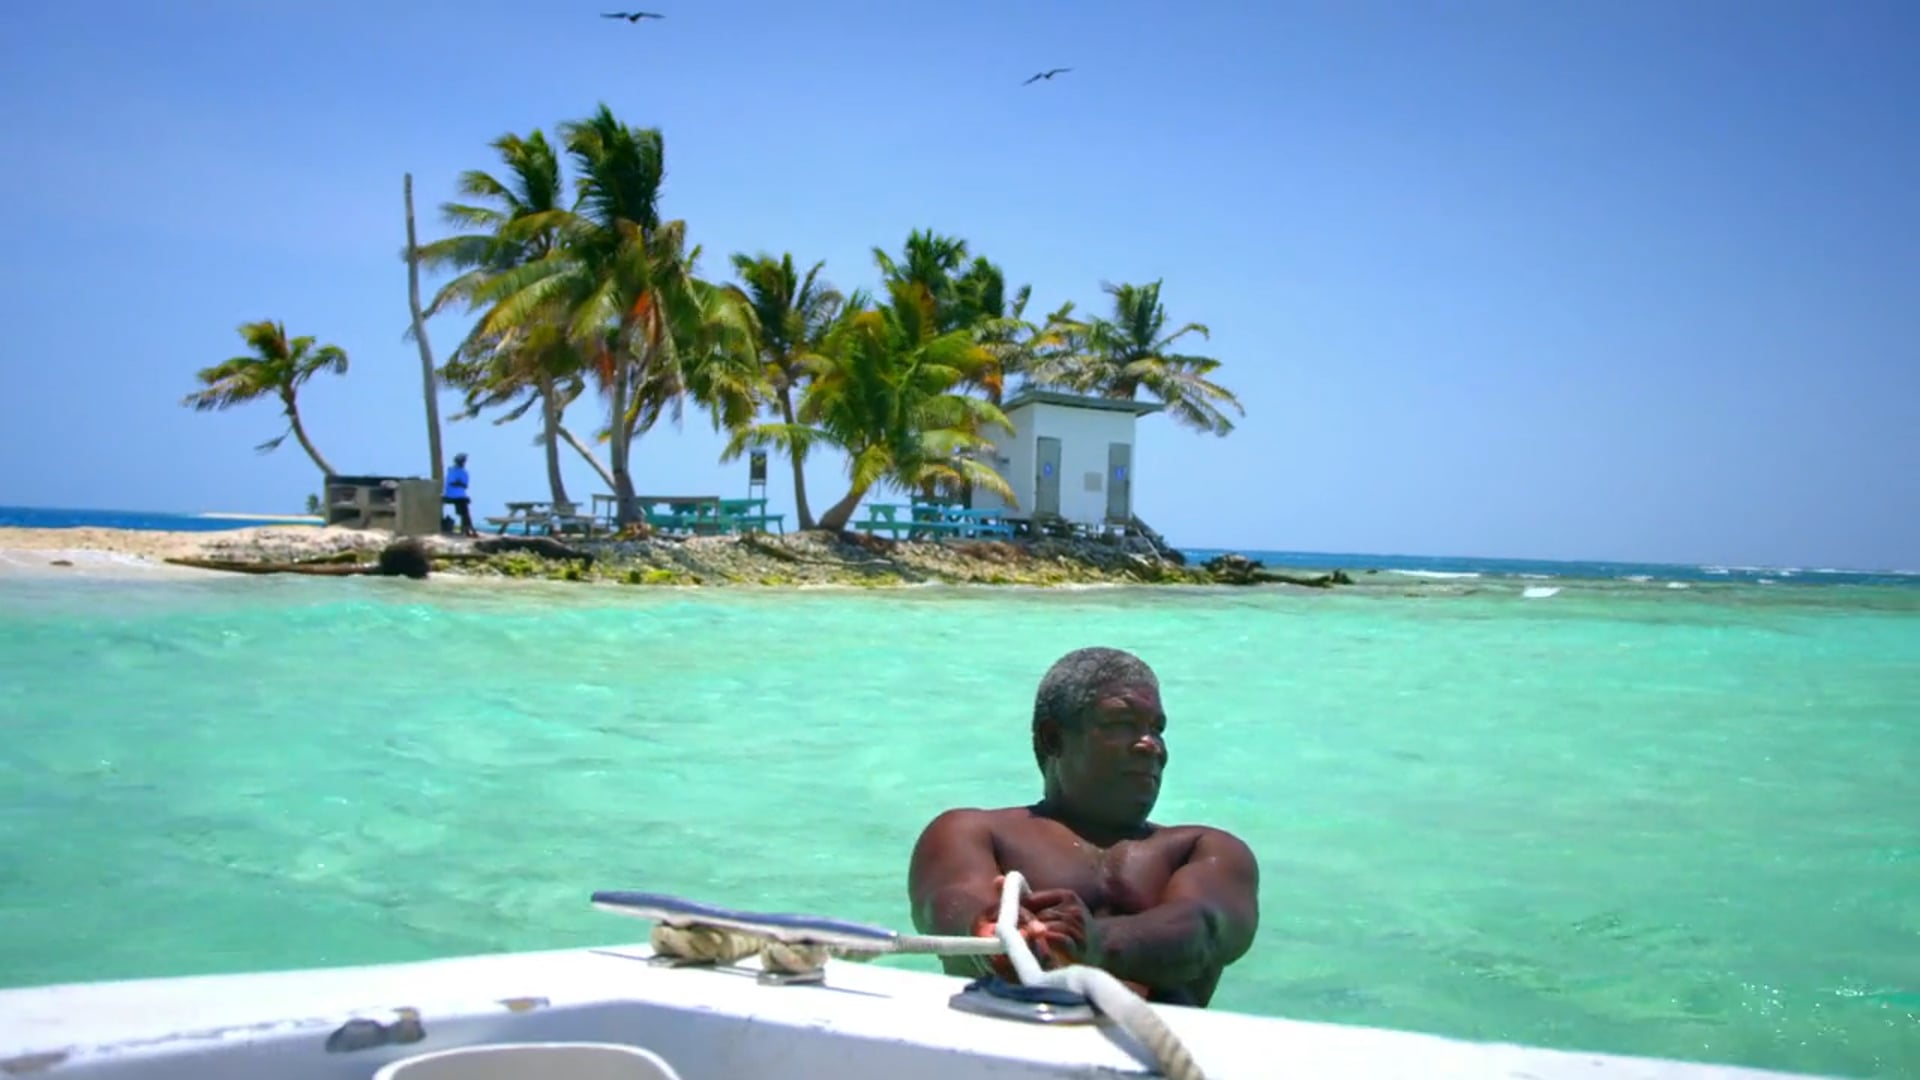 Belize Tourism Board - "Southeast Coast"